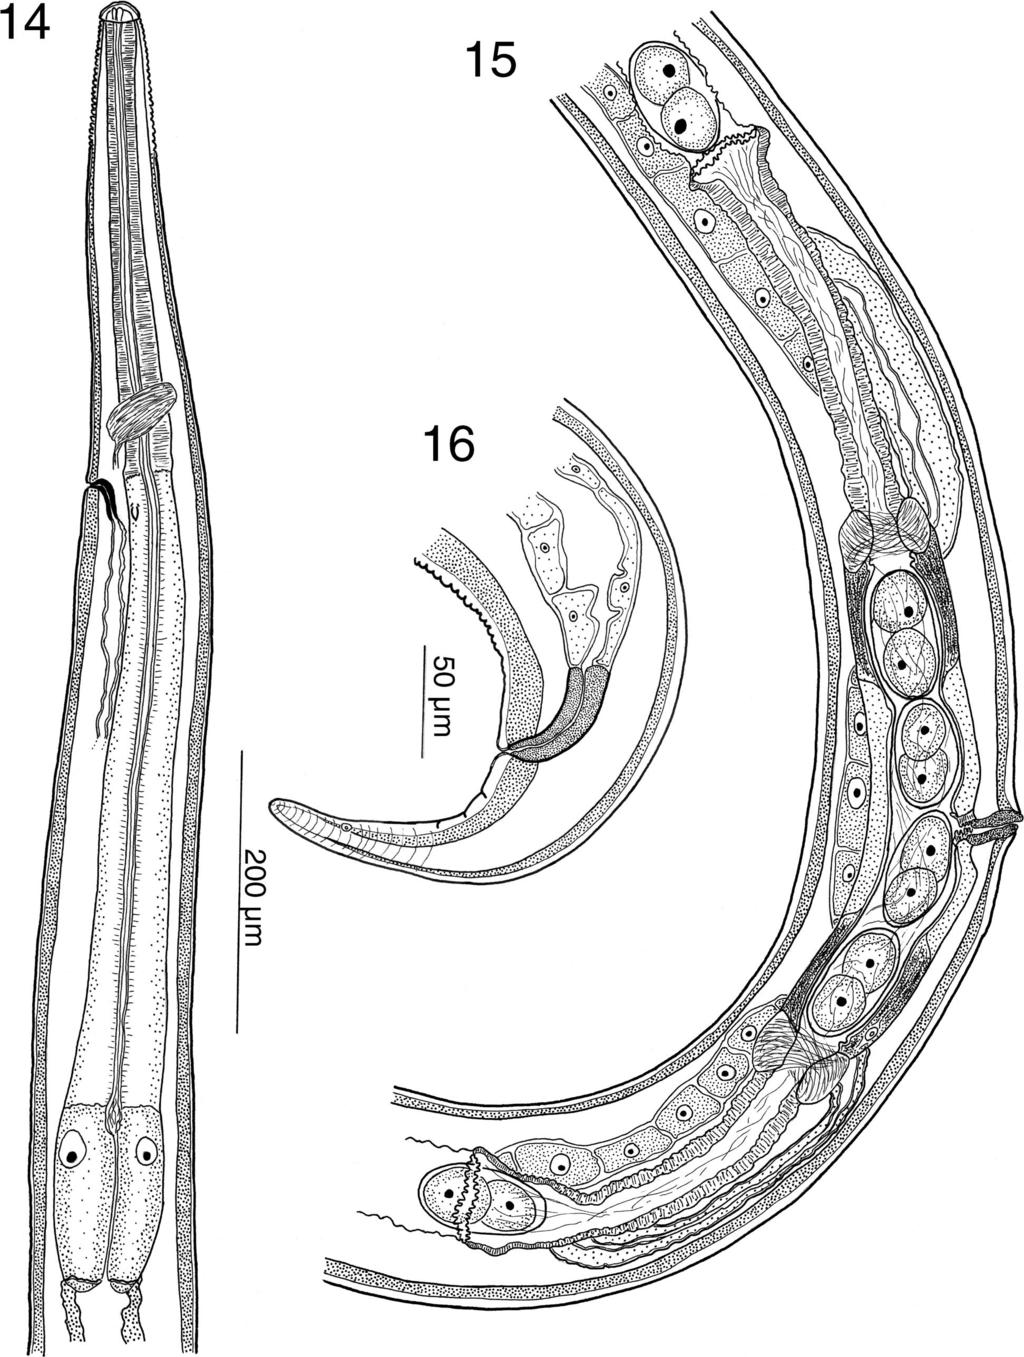 236 THE JOURNAL OF PARASITOLOGY, VOL. 94, NO. 1, FEBRUARY 2008 FIGURES 14 16. Africanastrongylus buceros gen. nov.